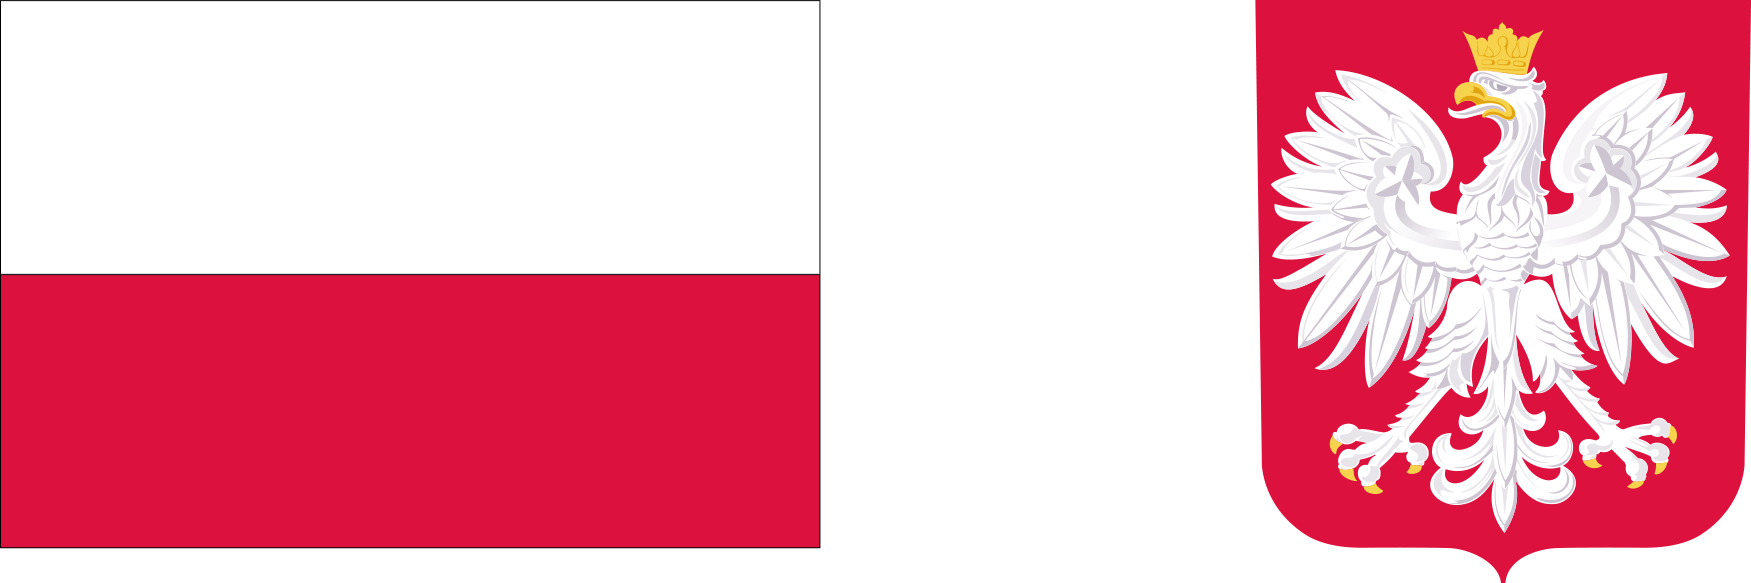 Znak - Flaga Polski - Godło Polski 